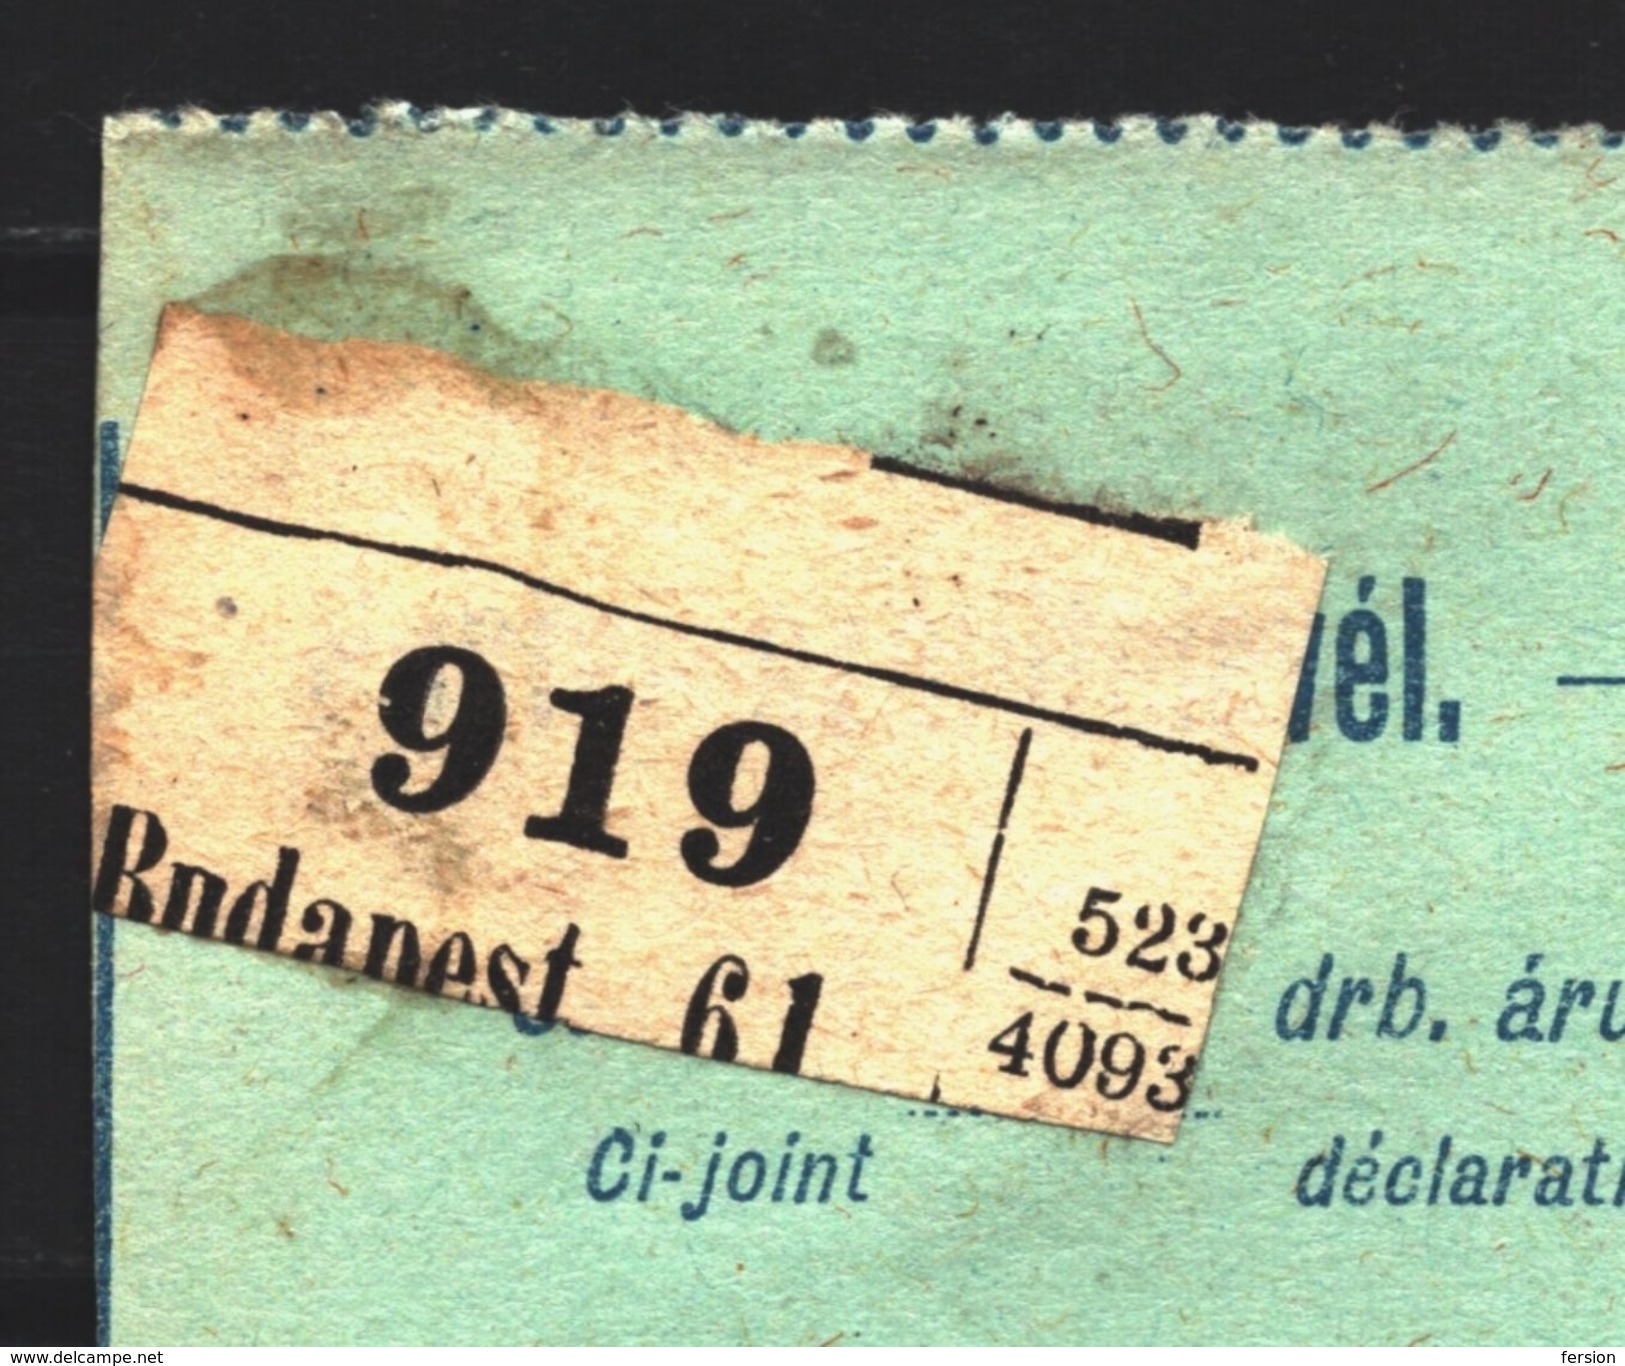 1915 HUNGARY Delivery Note Packet Form Postal Parcel Stationery Revenue Csíkrakos Transylvania - Paketmarken